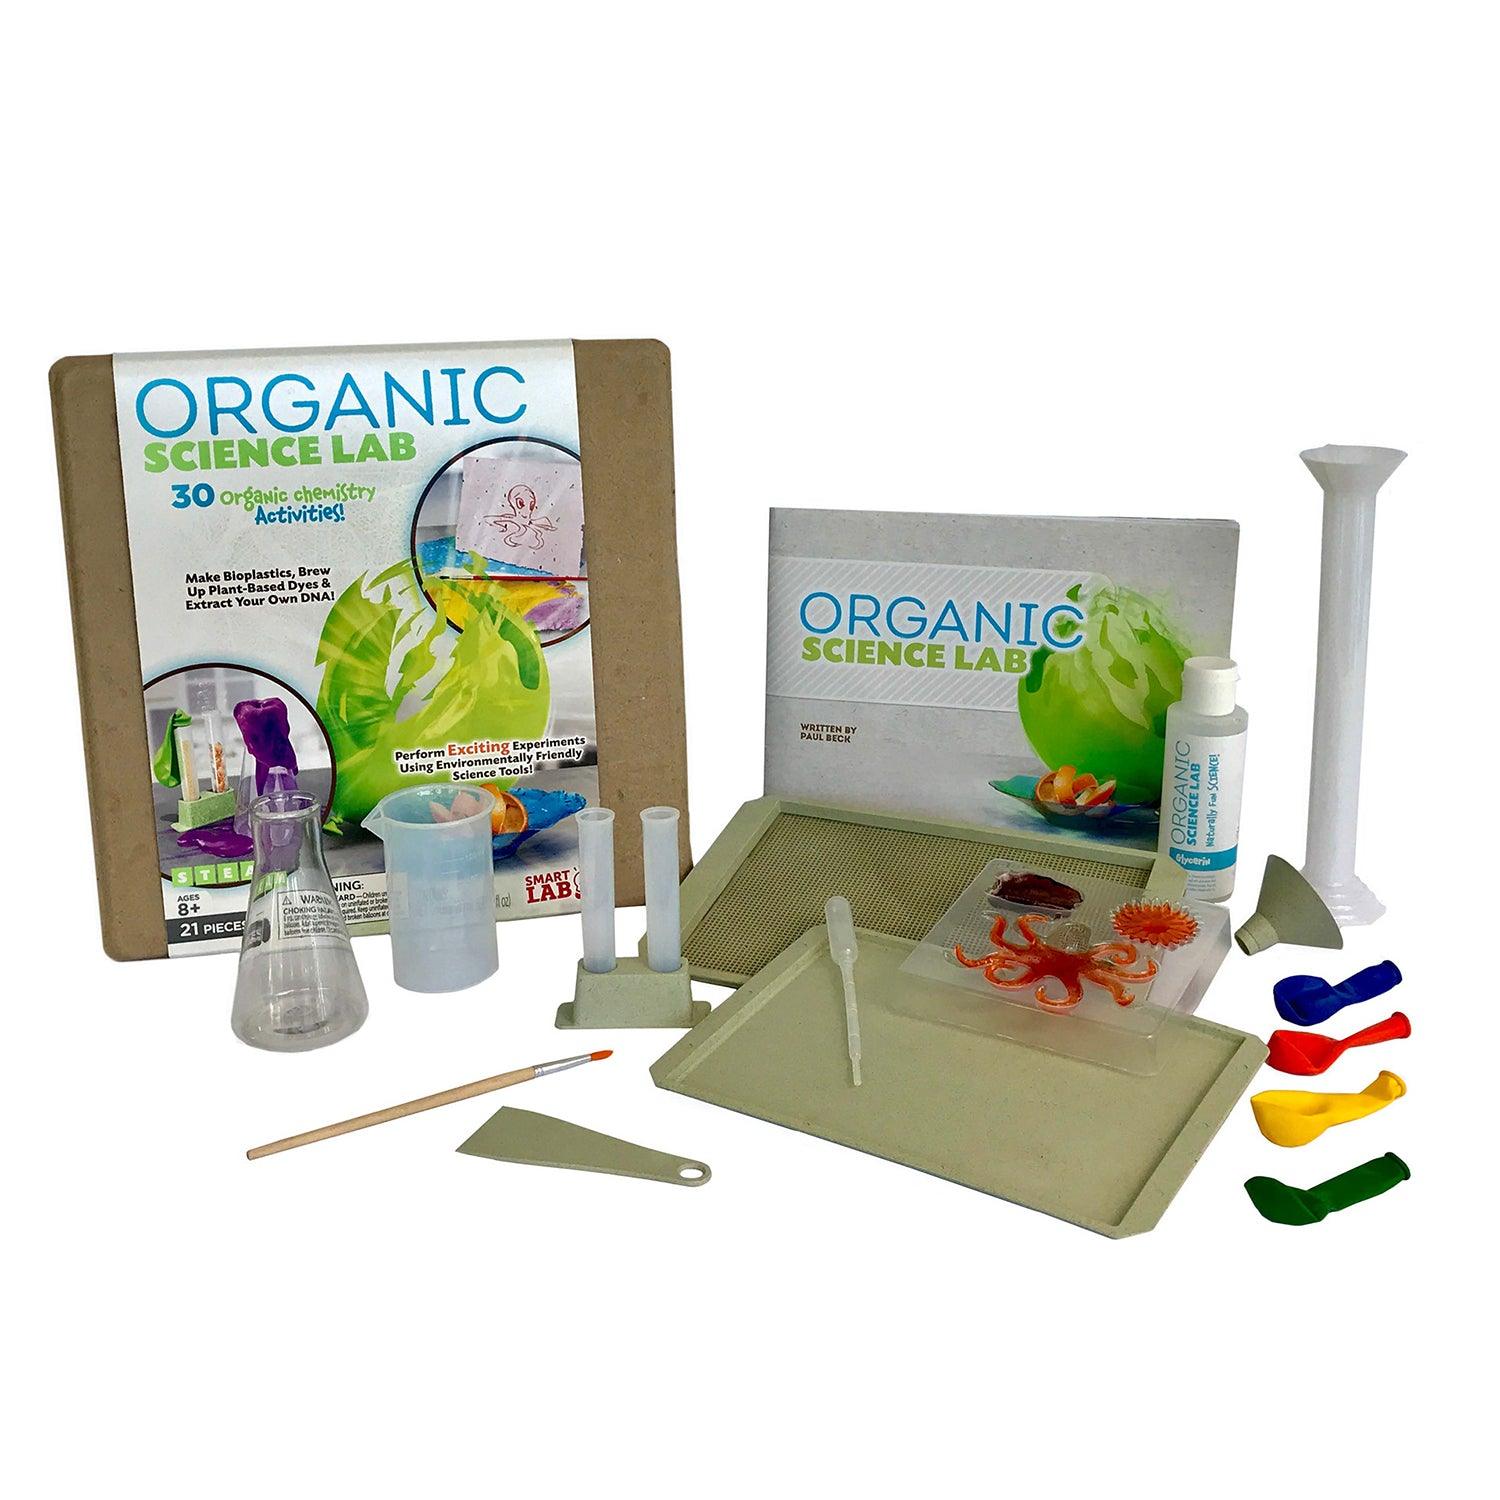 Organic Science Lab Kit - Kits - Science Museum Shop